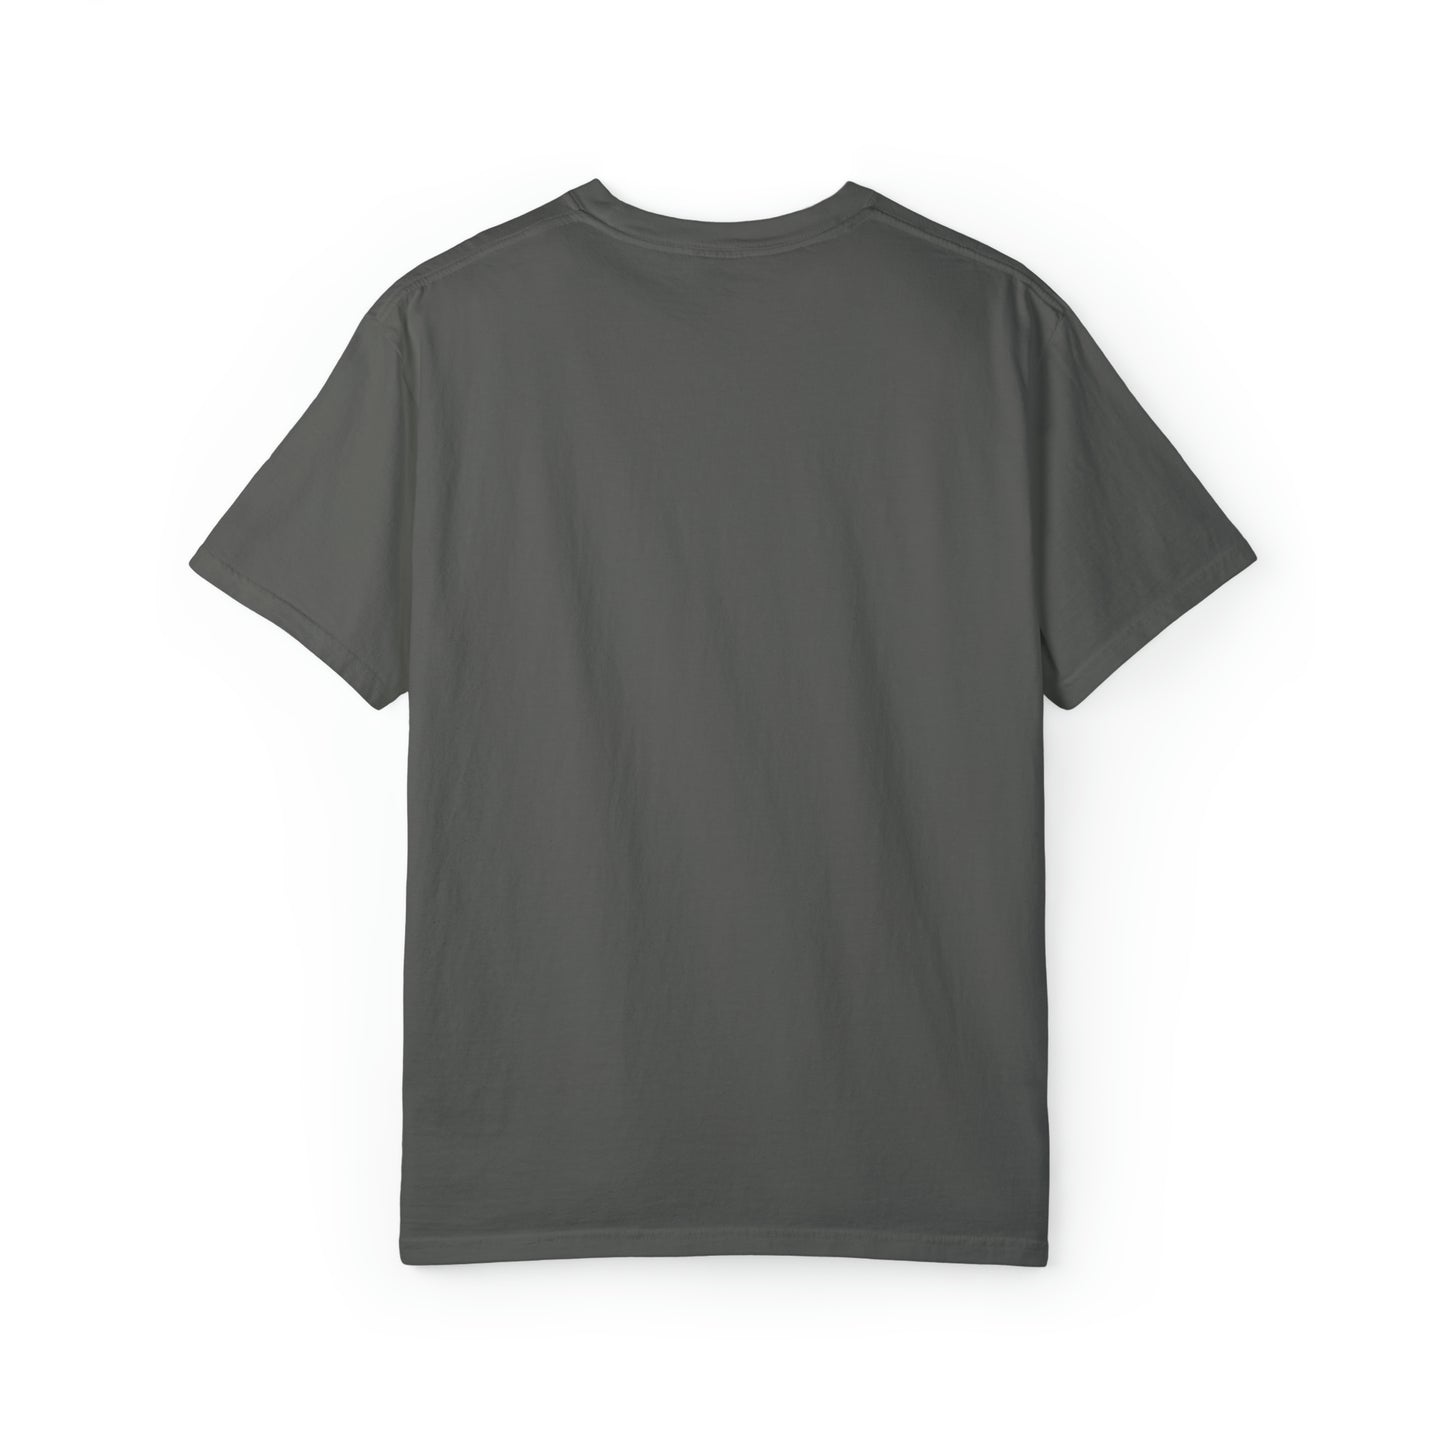 Dear Black Girl Unisex Garment-Dyed T-shirt